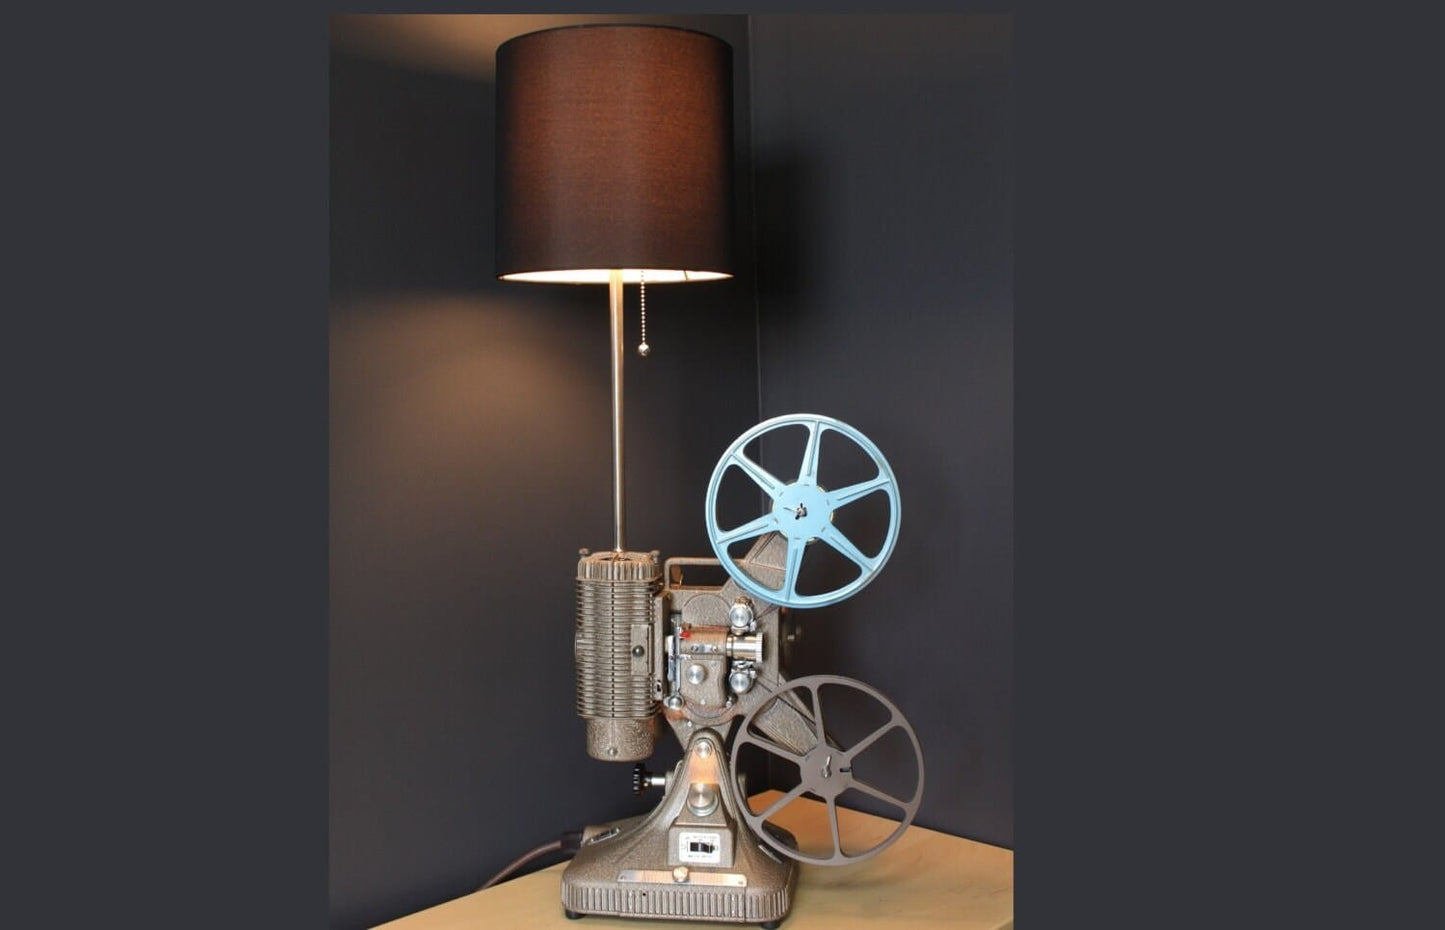 LightAndTimeArt Projector Lamp Vintage Table Lamp / Desk Lamp - Keystone Regal 8MM Projector - Hollywood & Movie Theater décor - Film Art